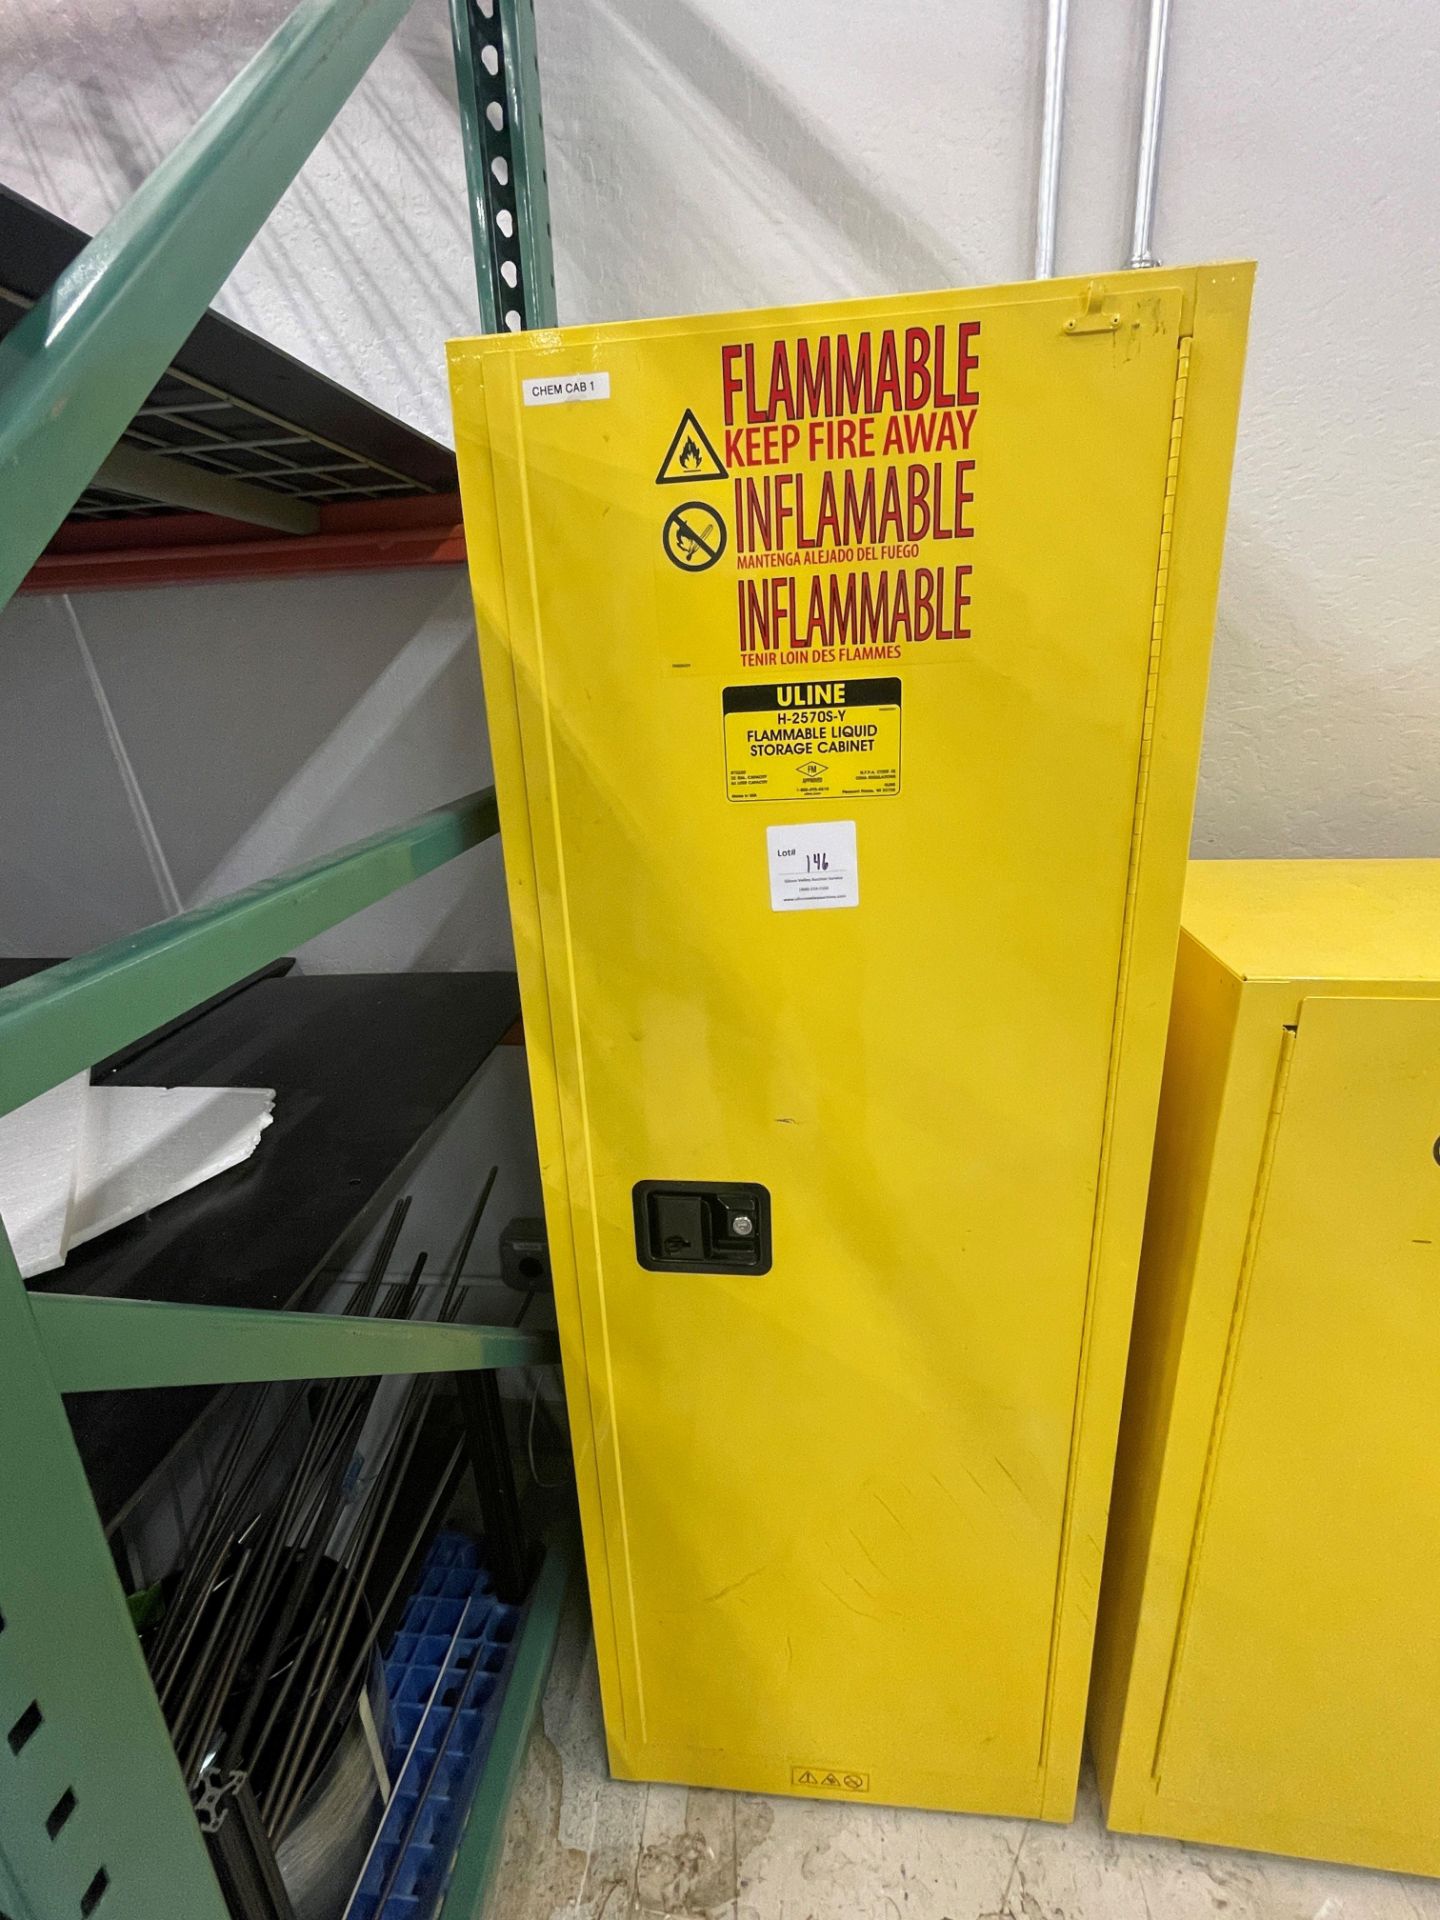 Uline Flamable Liquid Storage Cabinet Model H-2570S-Y 23" wide x 18" deep x 66" high